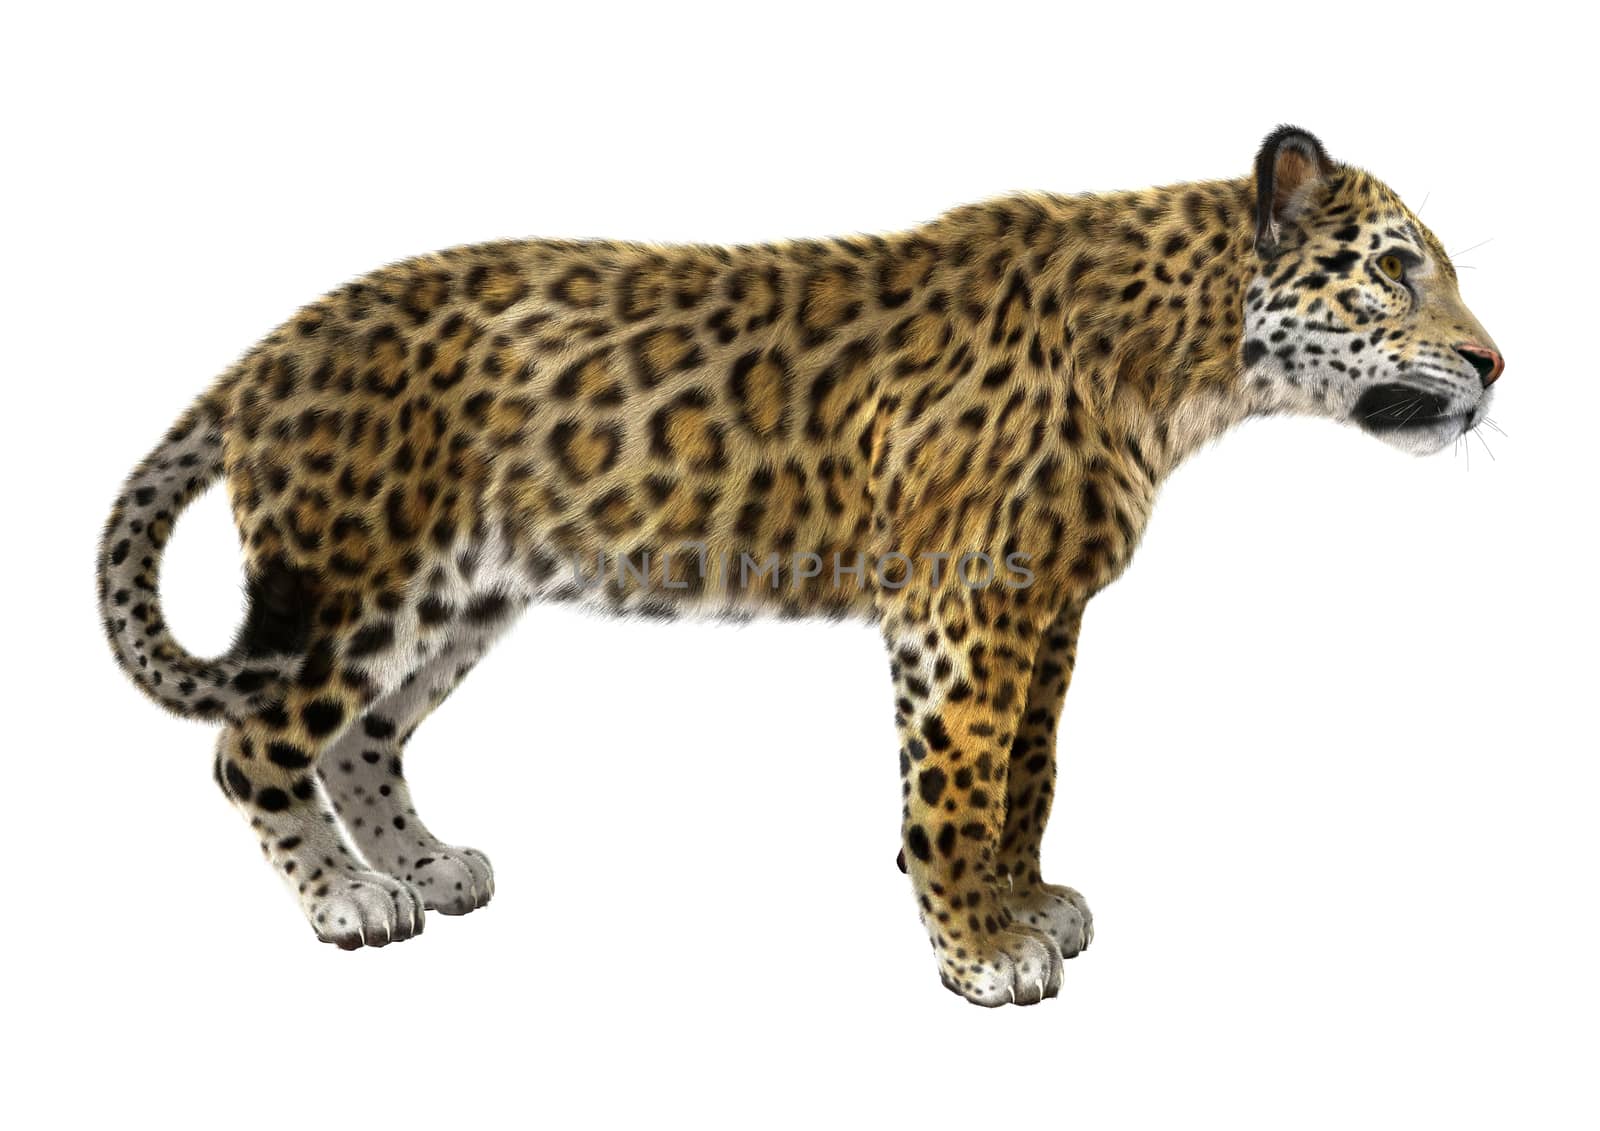 3D digital render of a big cat jaguar isolated on white background